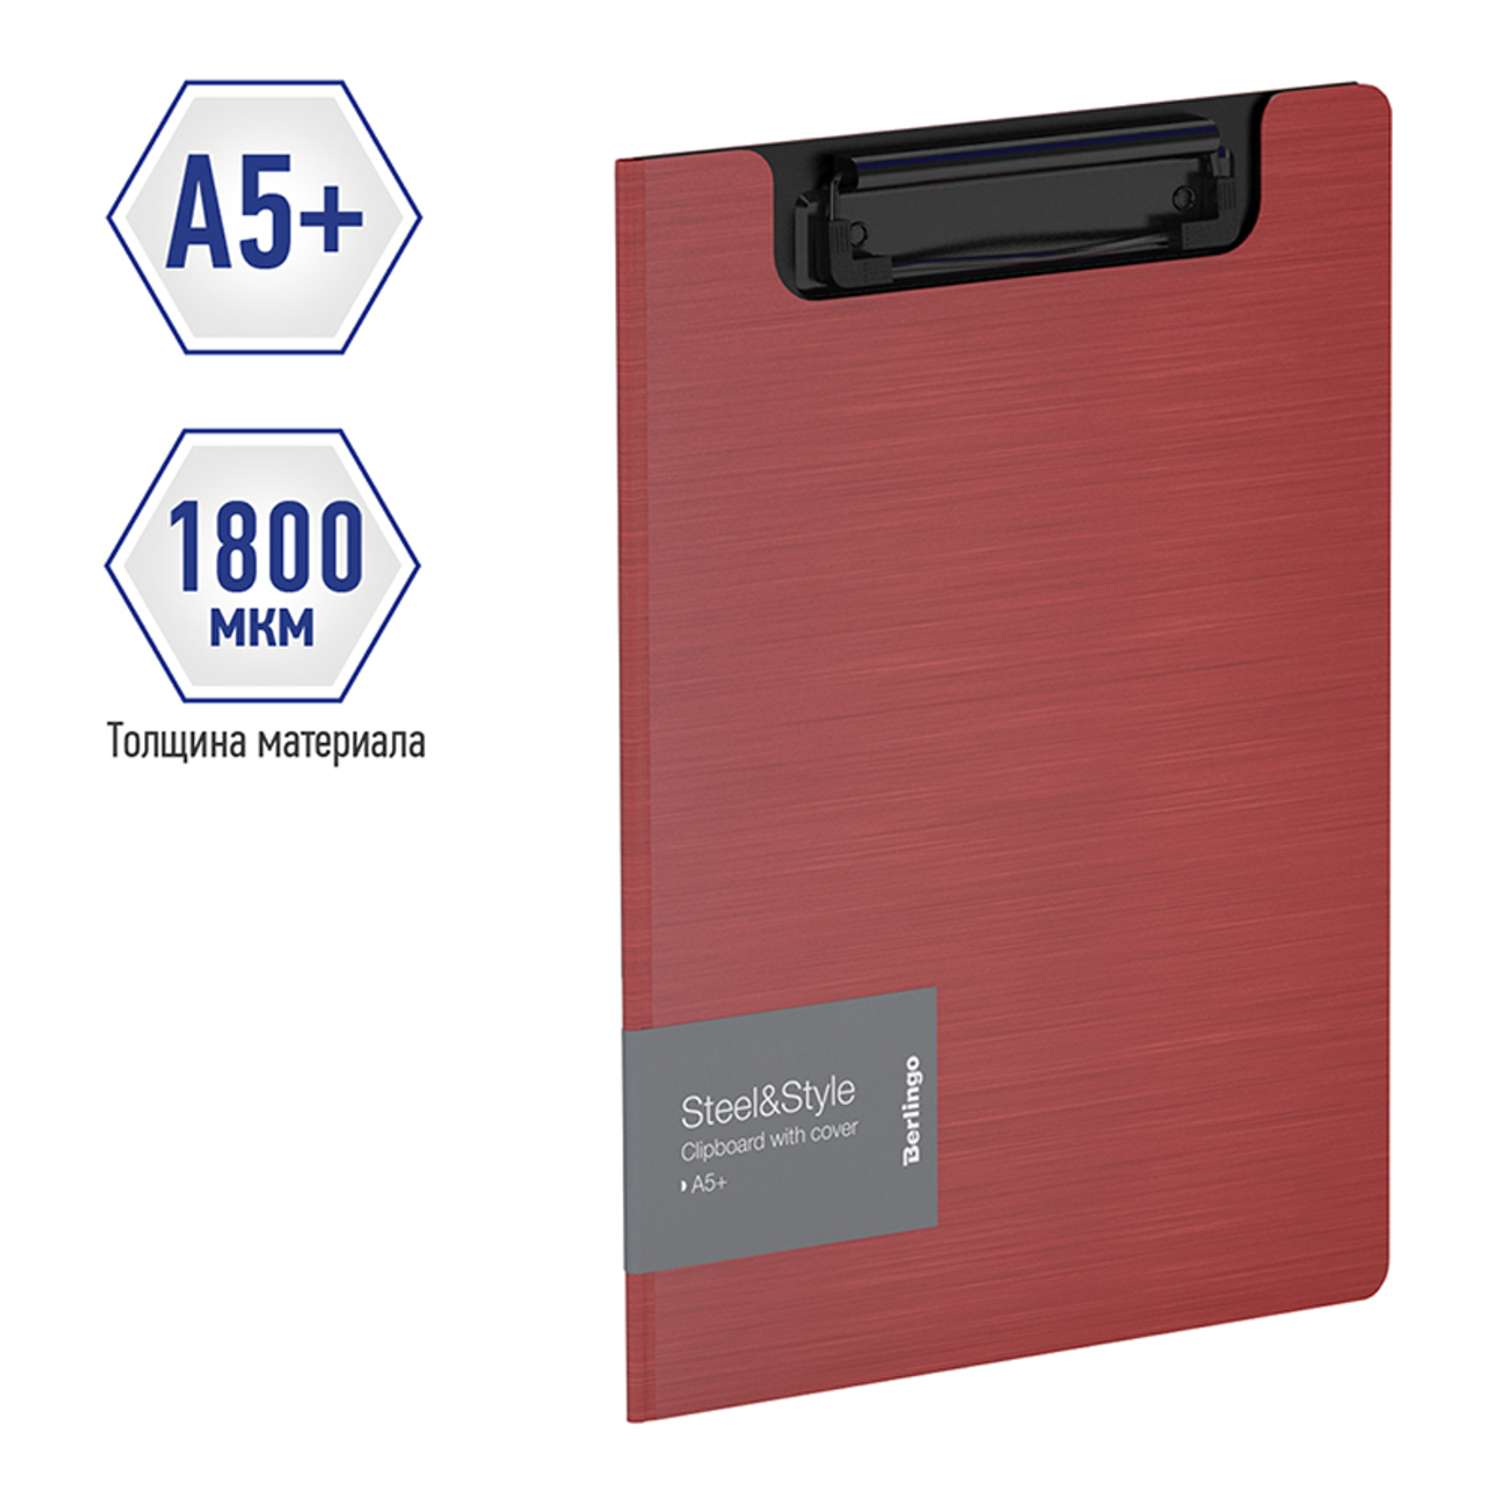 Папка-планшет с зажимом Berlingo Steel ampStyle А5+ 1800мкм пластик полифом красная - фото 2